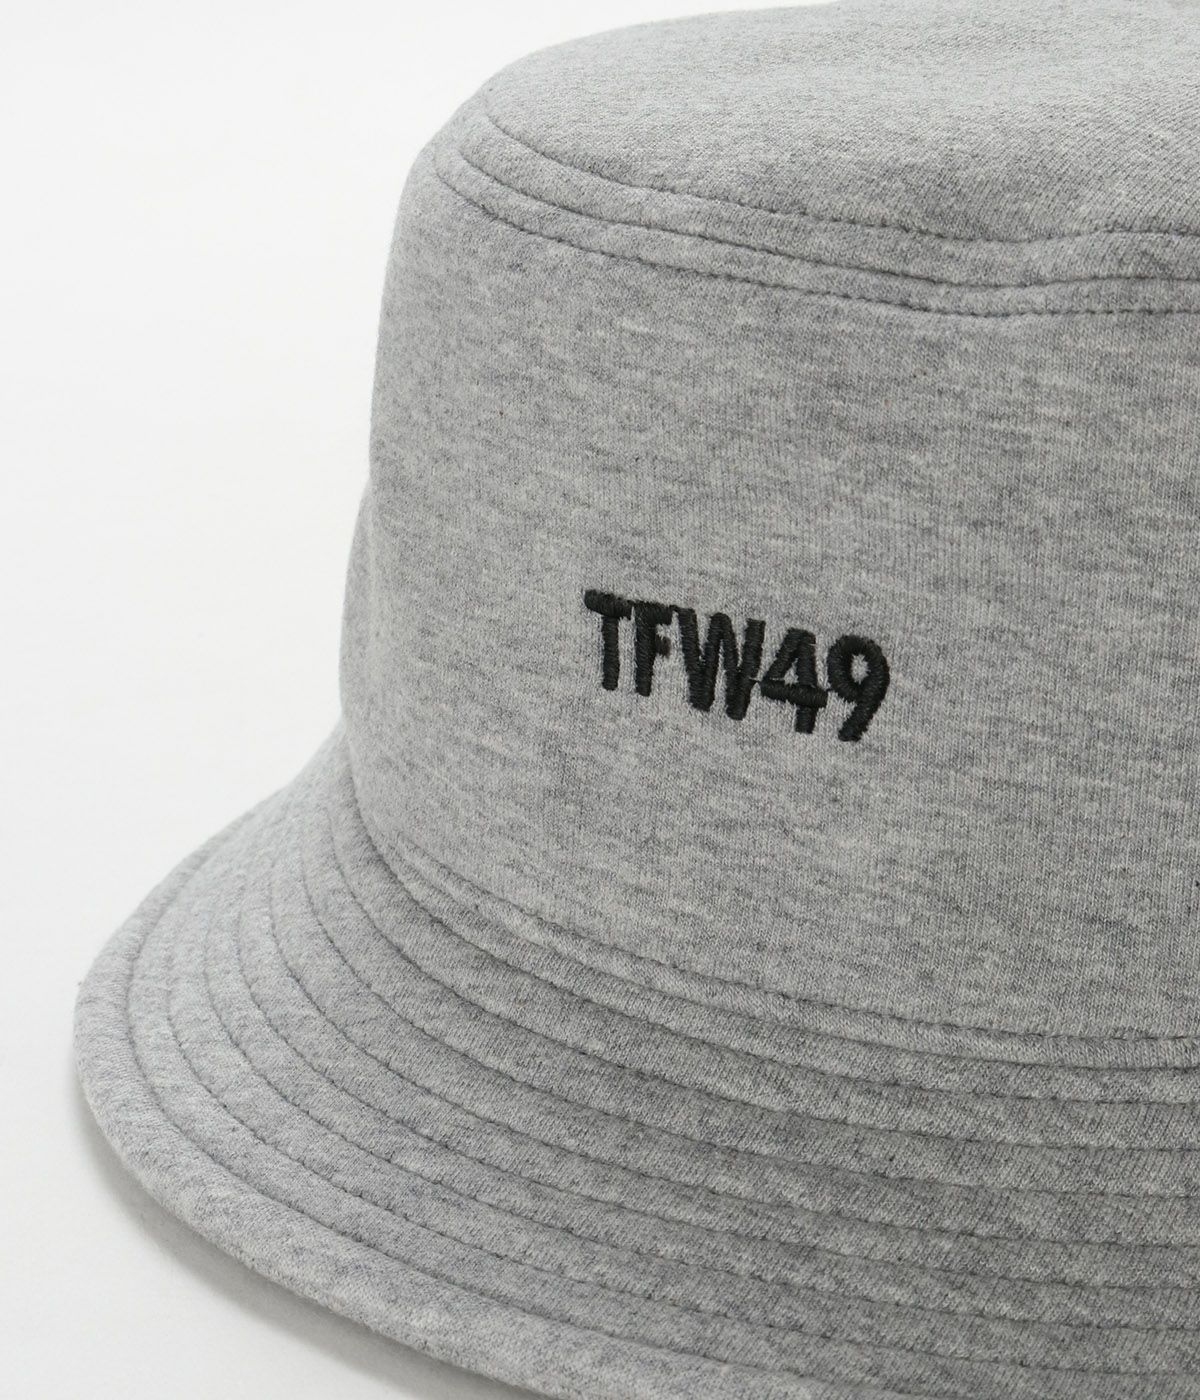 TFW49 BAGUETTE HAT | TFW49（ティーエフダブリュー）Official EC Store